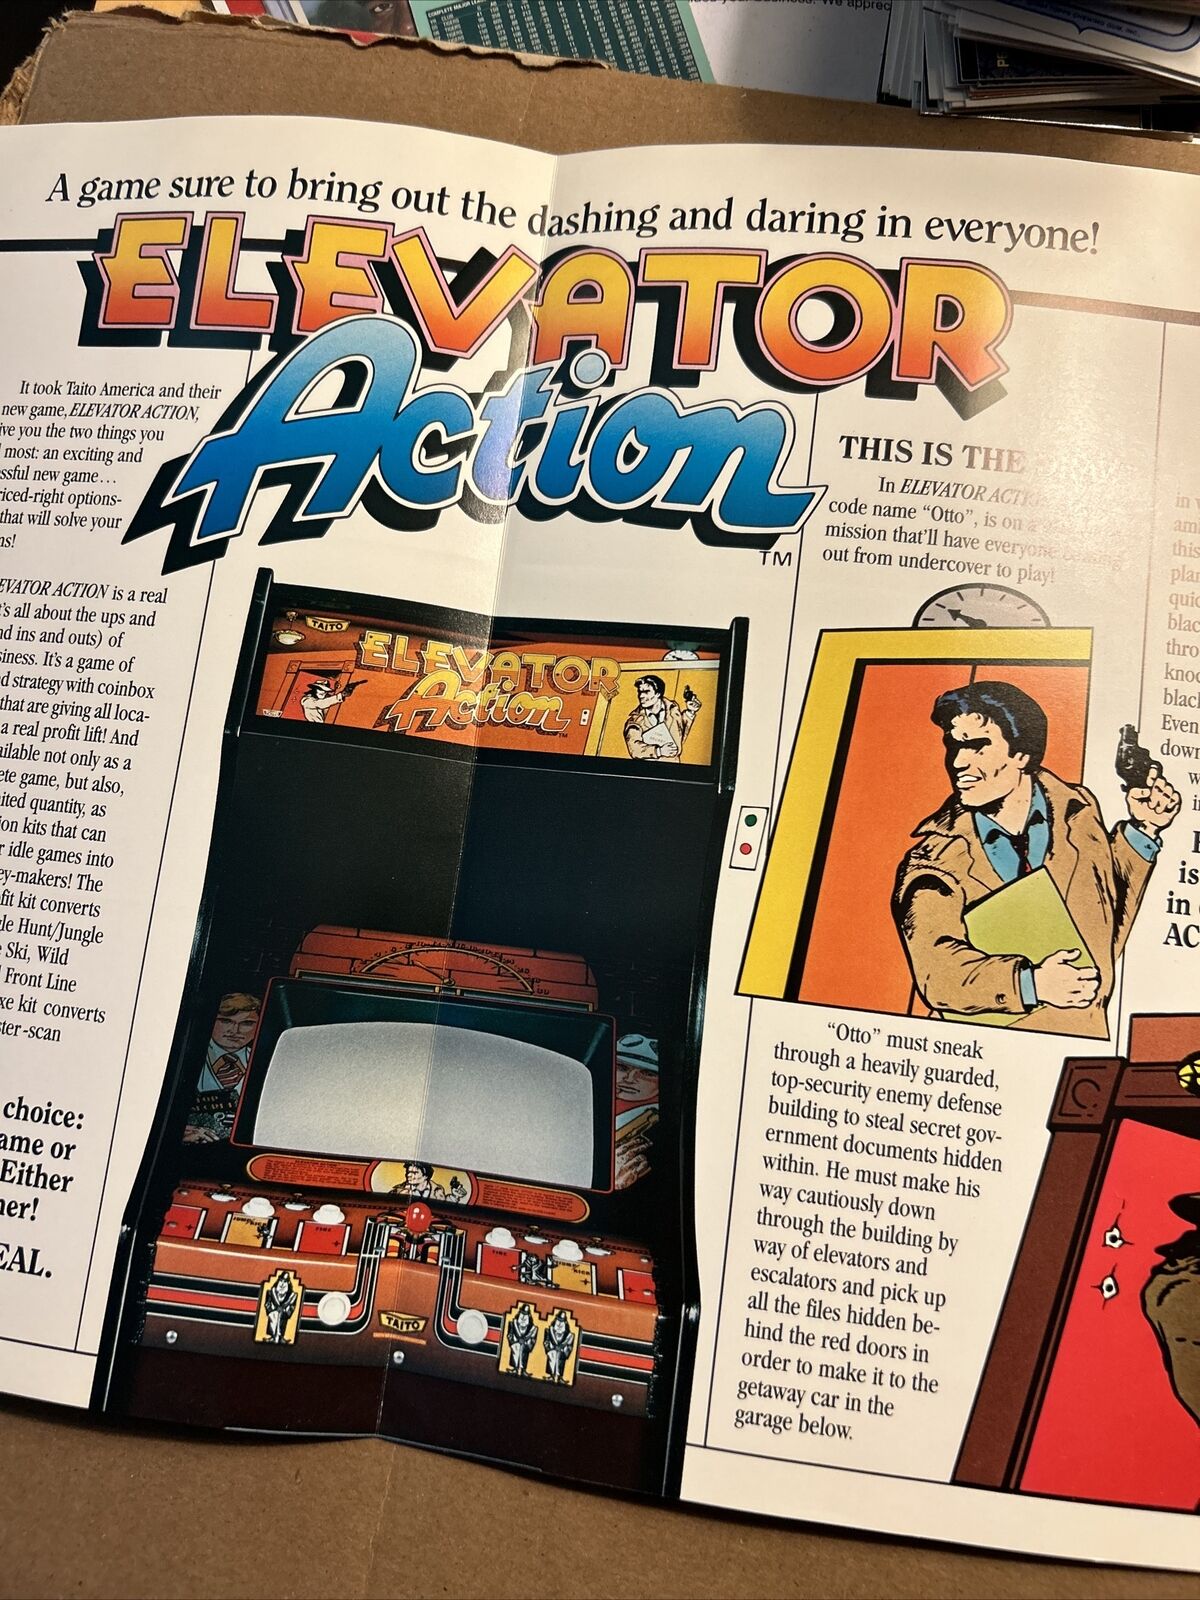 11-8 1/4'' 1983 Original Taito Elevator, Action arcade  game  FLYER AD